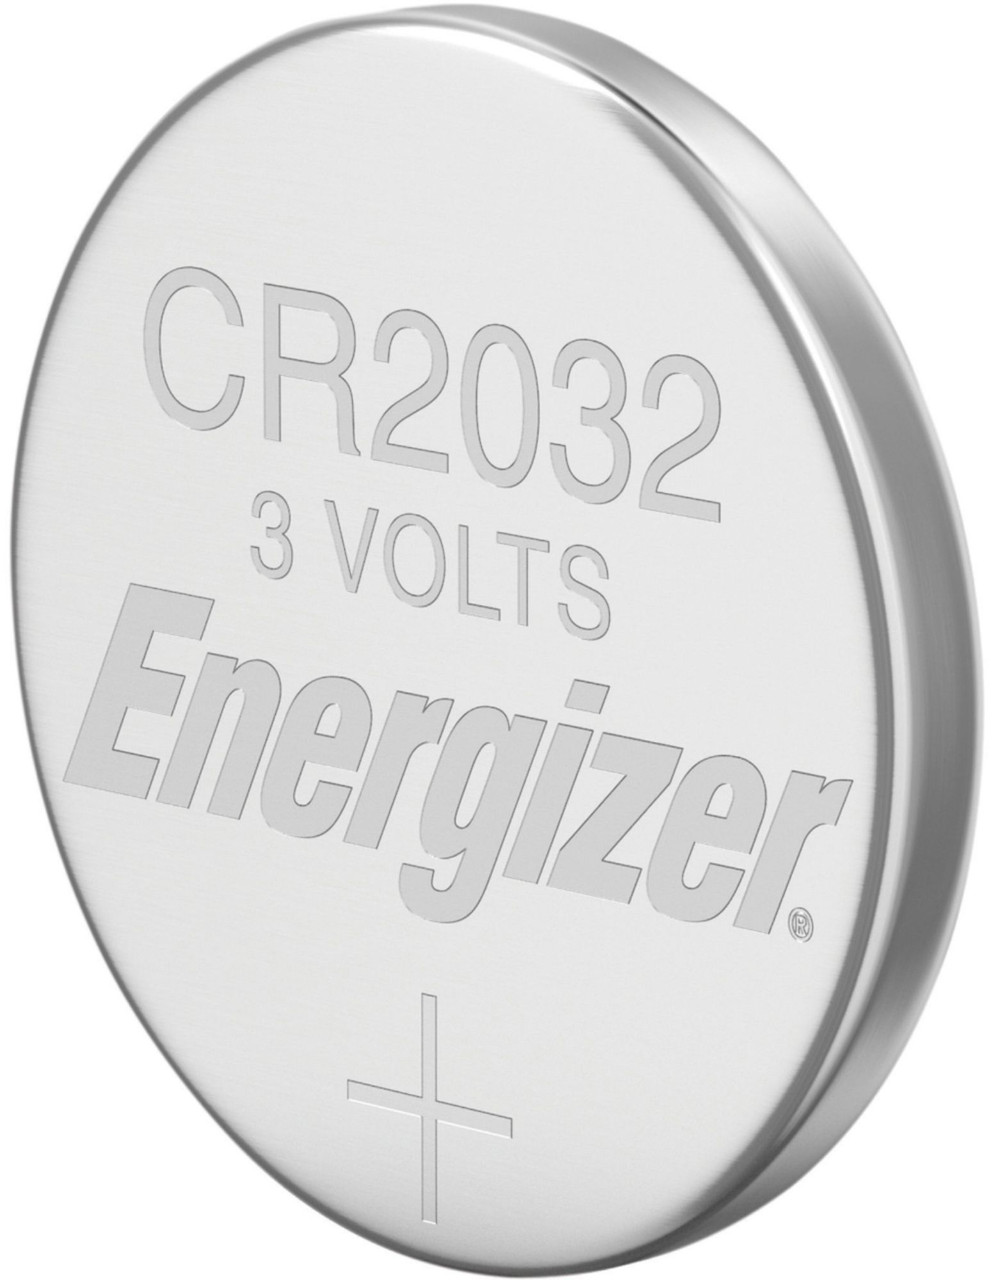 Energizer - 2032 Batteries (2-Pack)